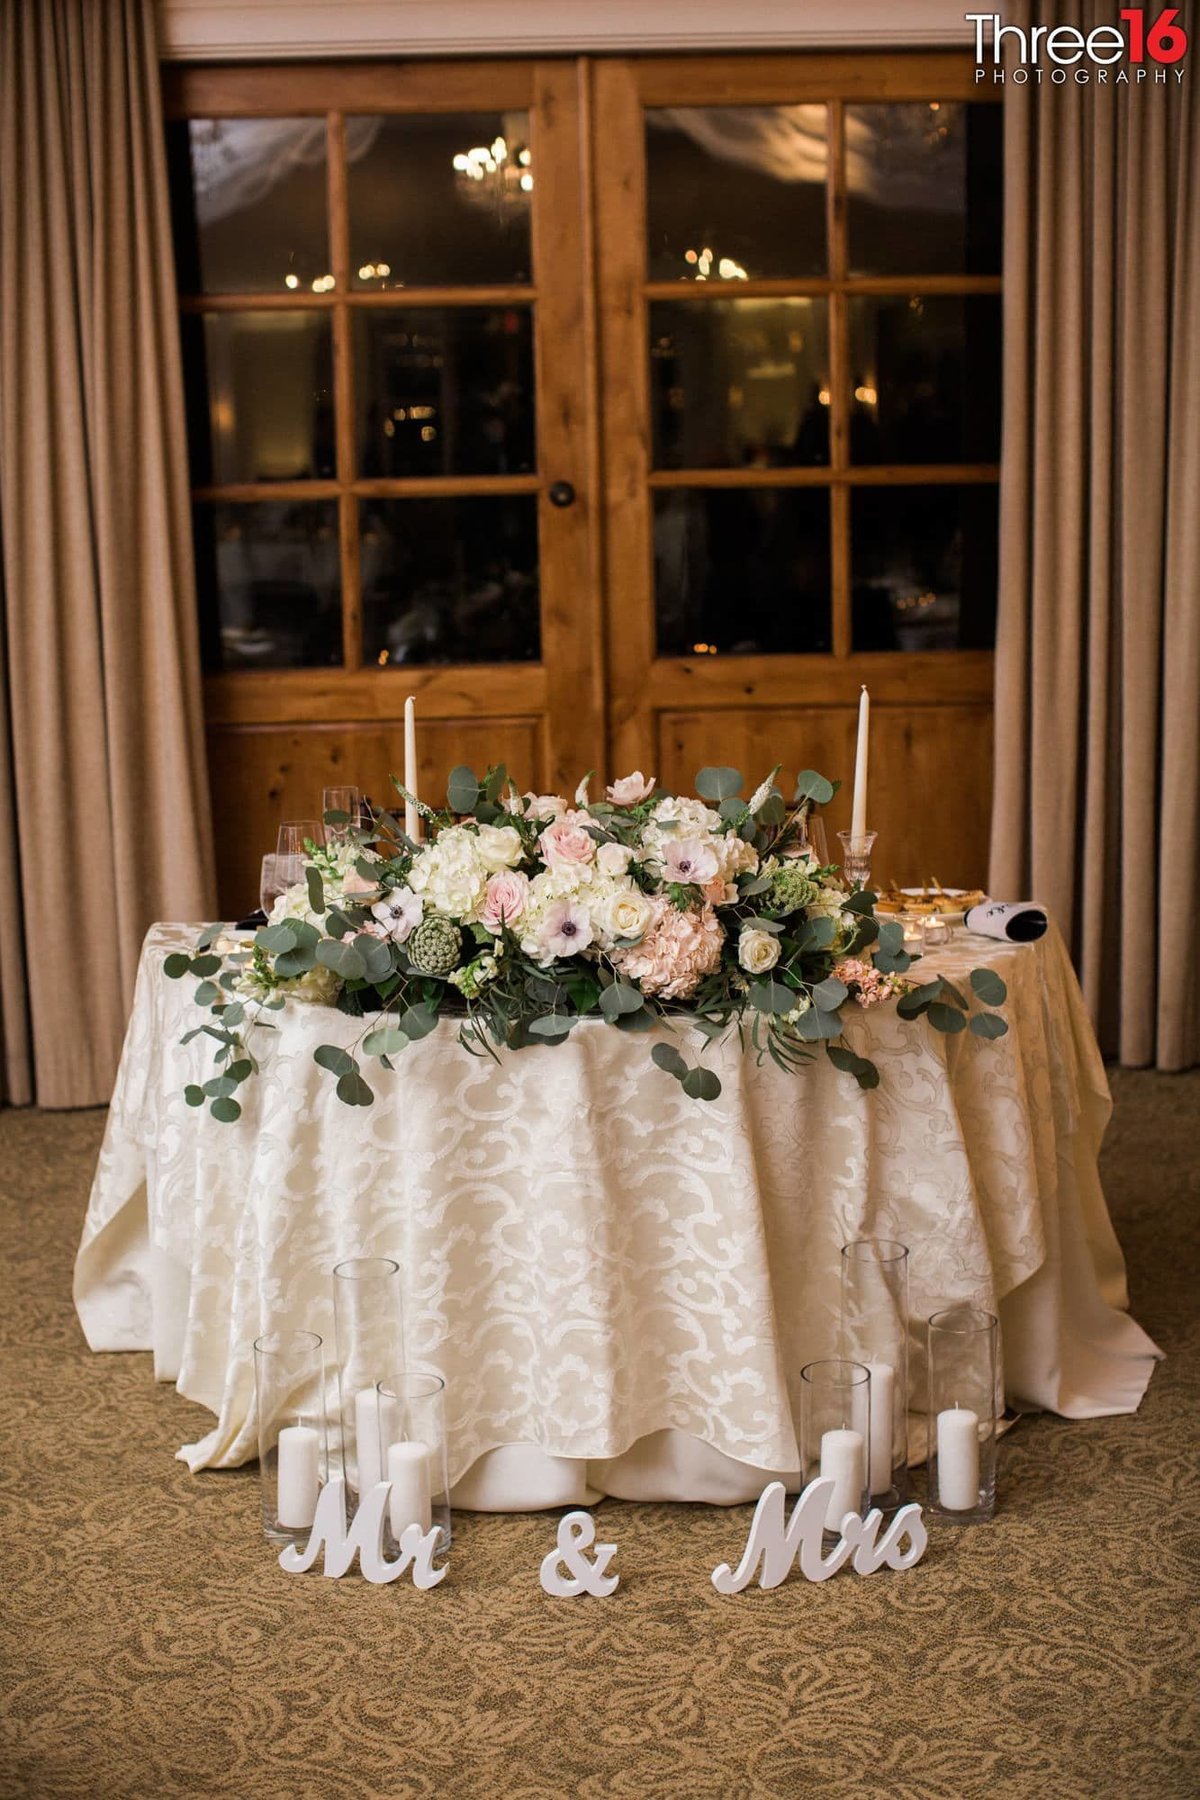 Bridal Table at the Reception